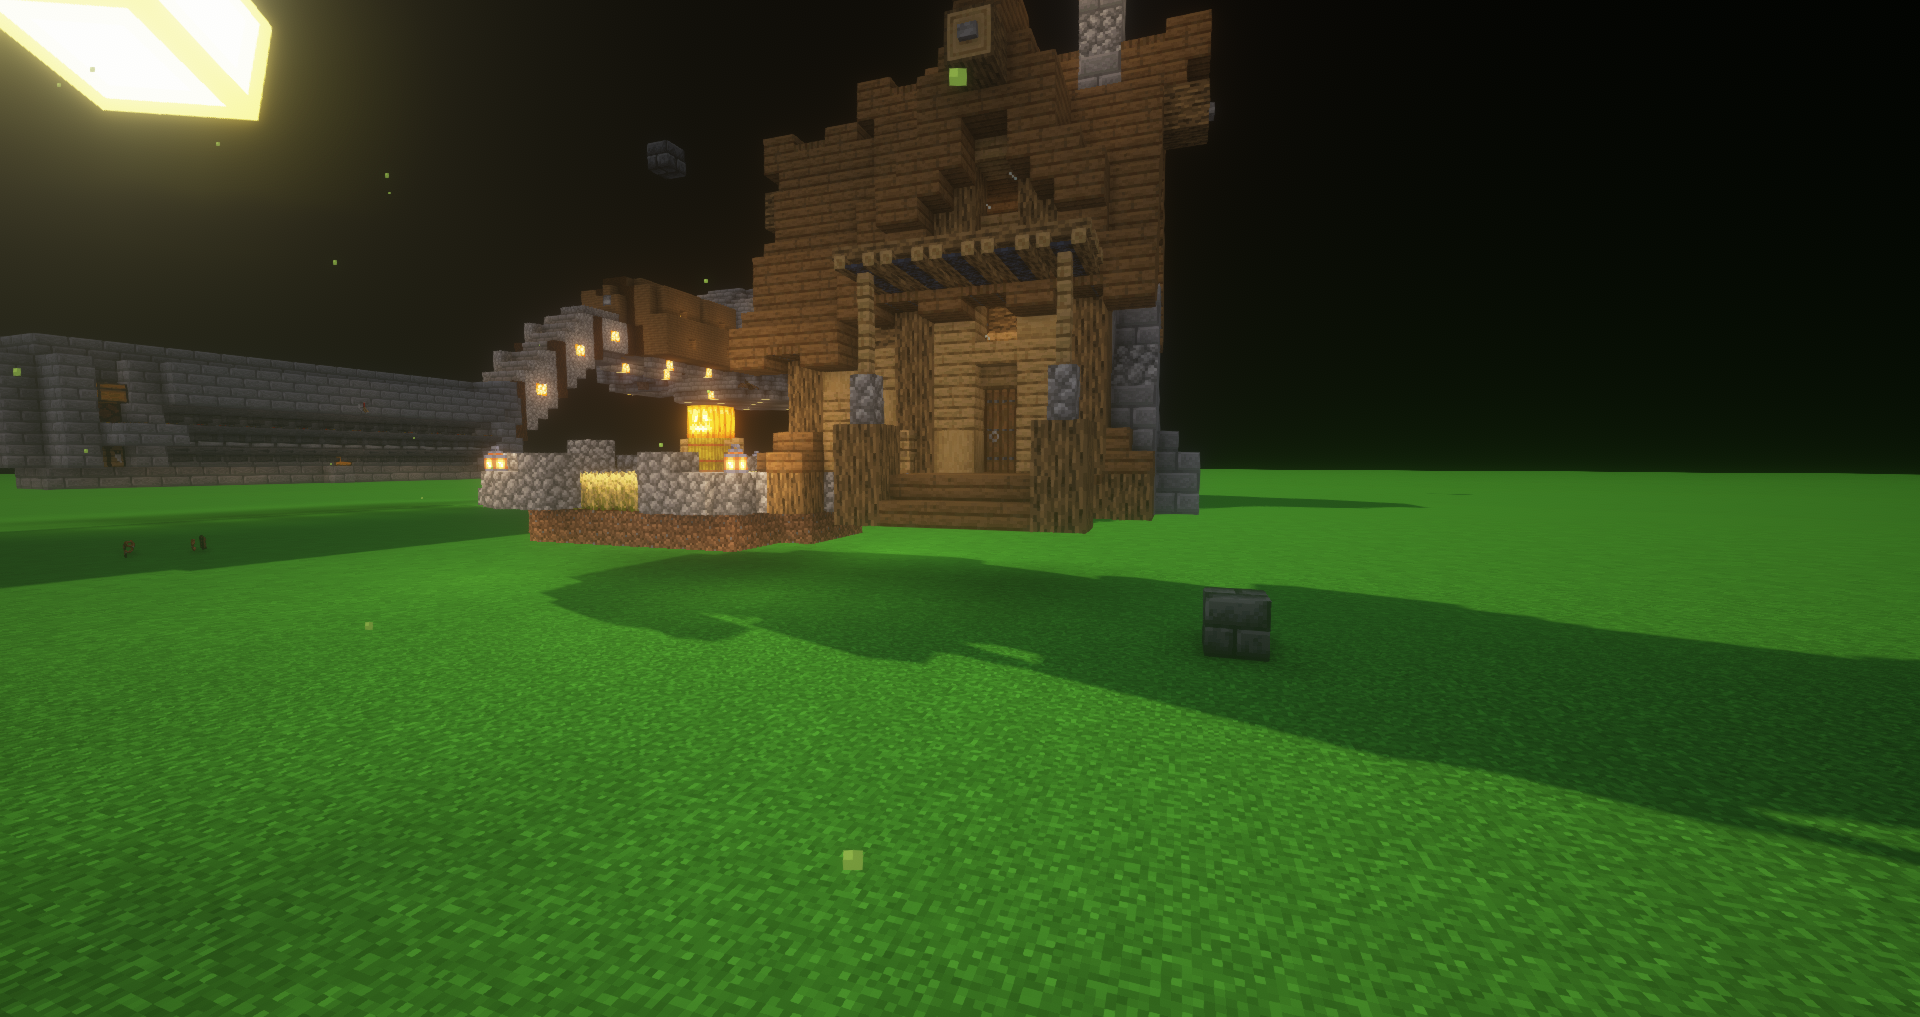 Minecract Minecraft Villager Houses - THE FARMER schematic (litematic)